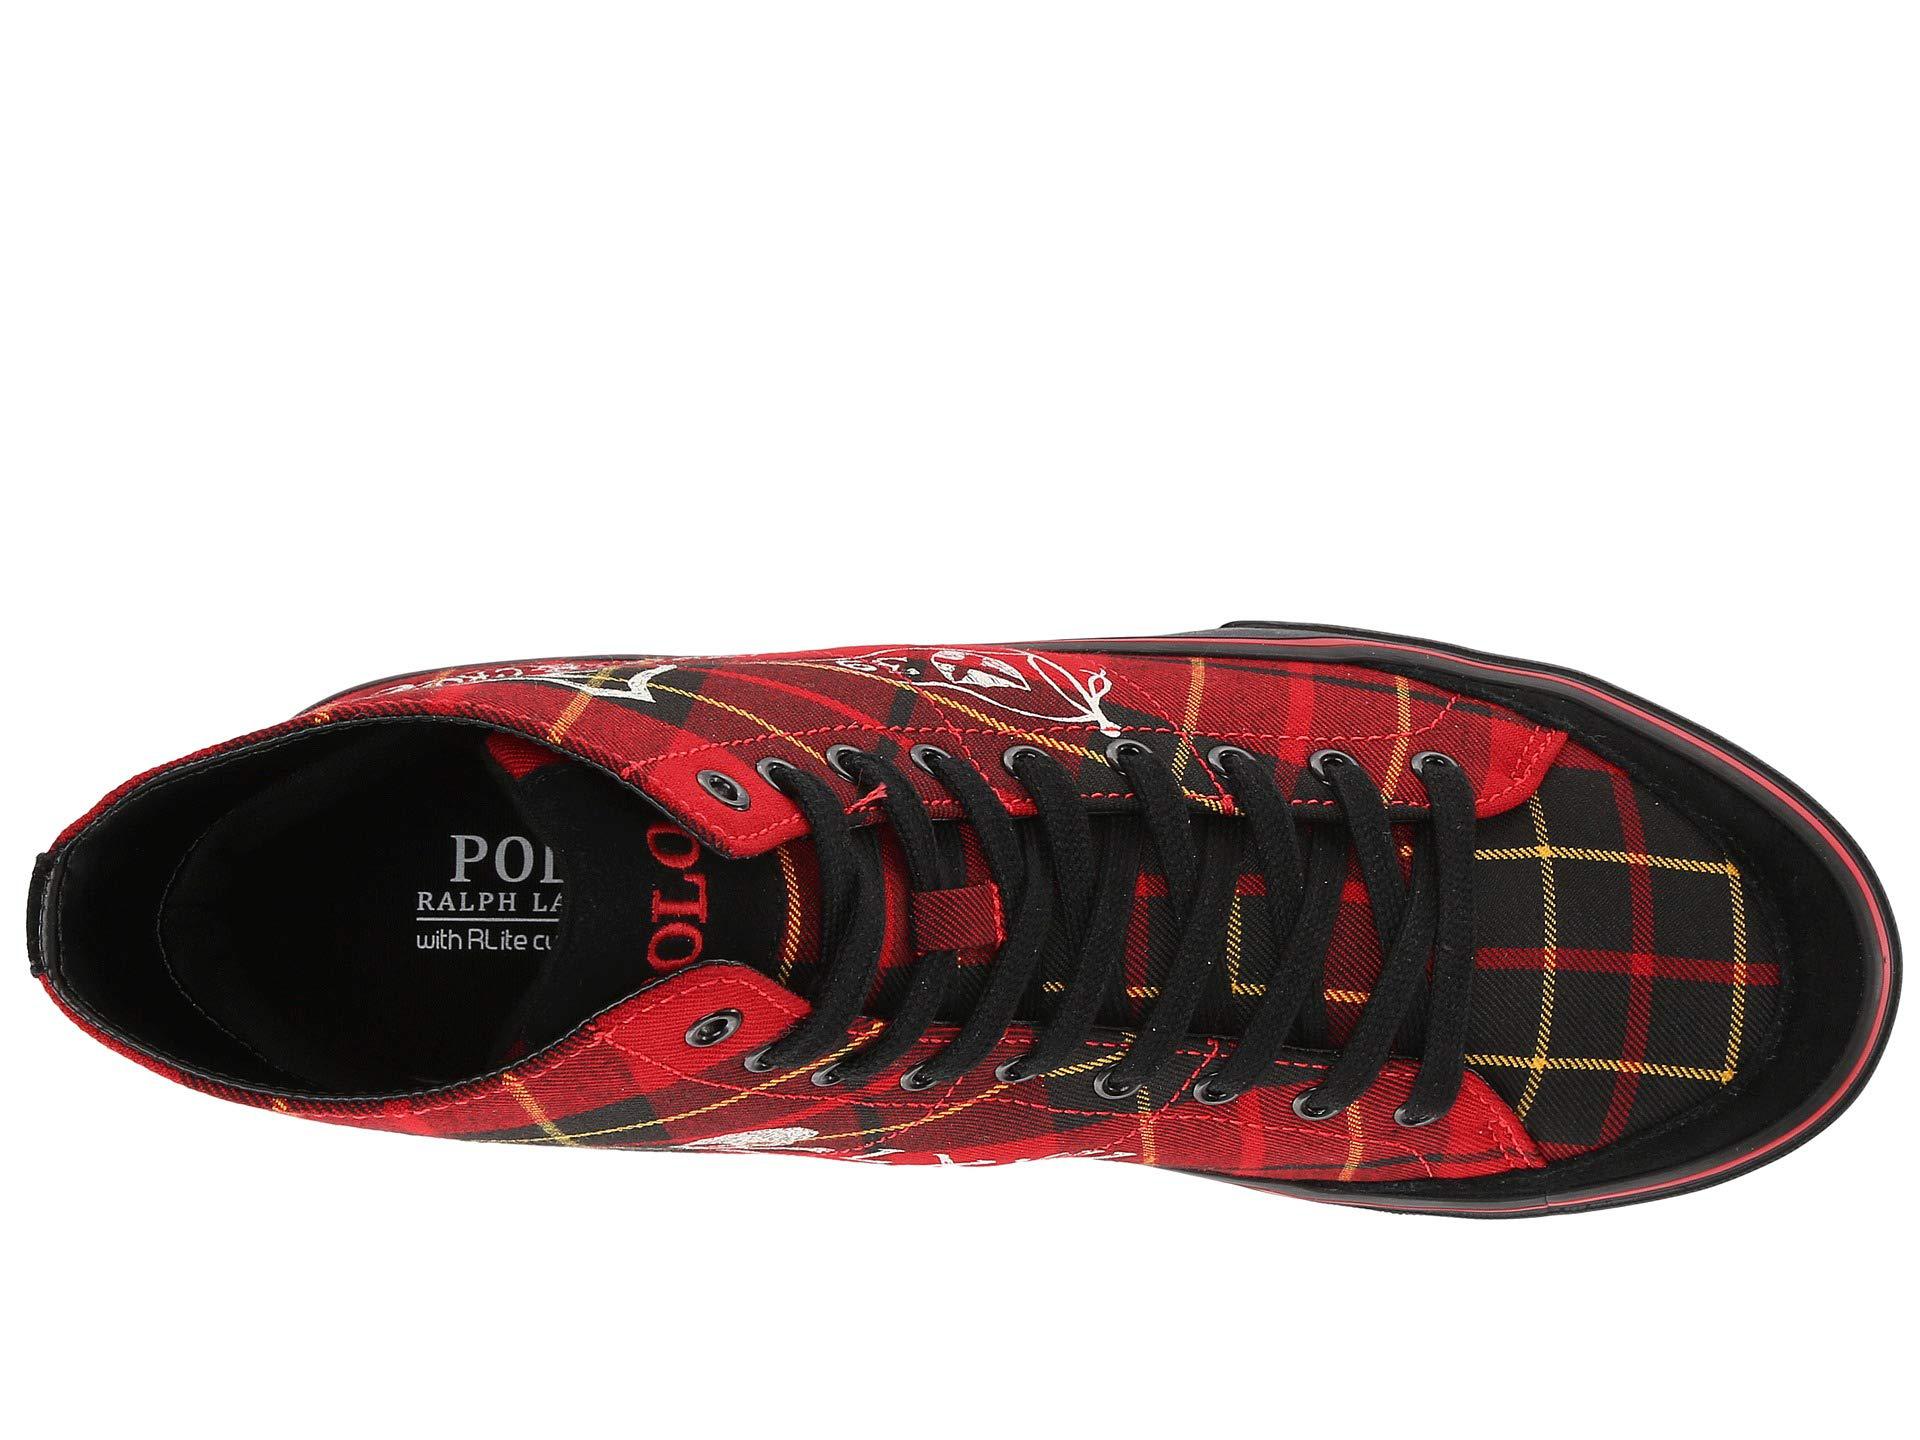 Polo Ralph Lauren Leather Solomon Sneaker in Red for Men - Lyst